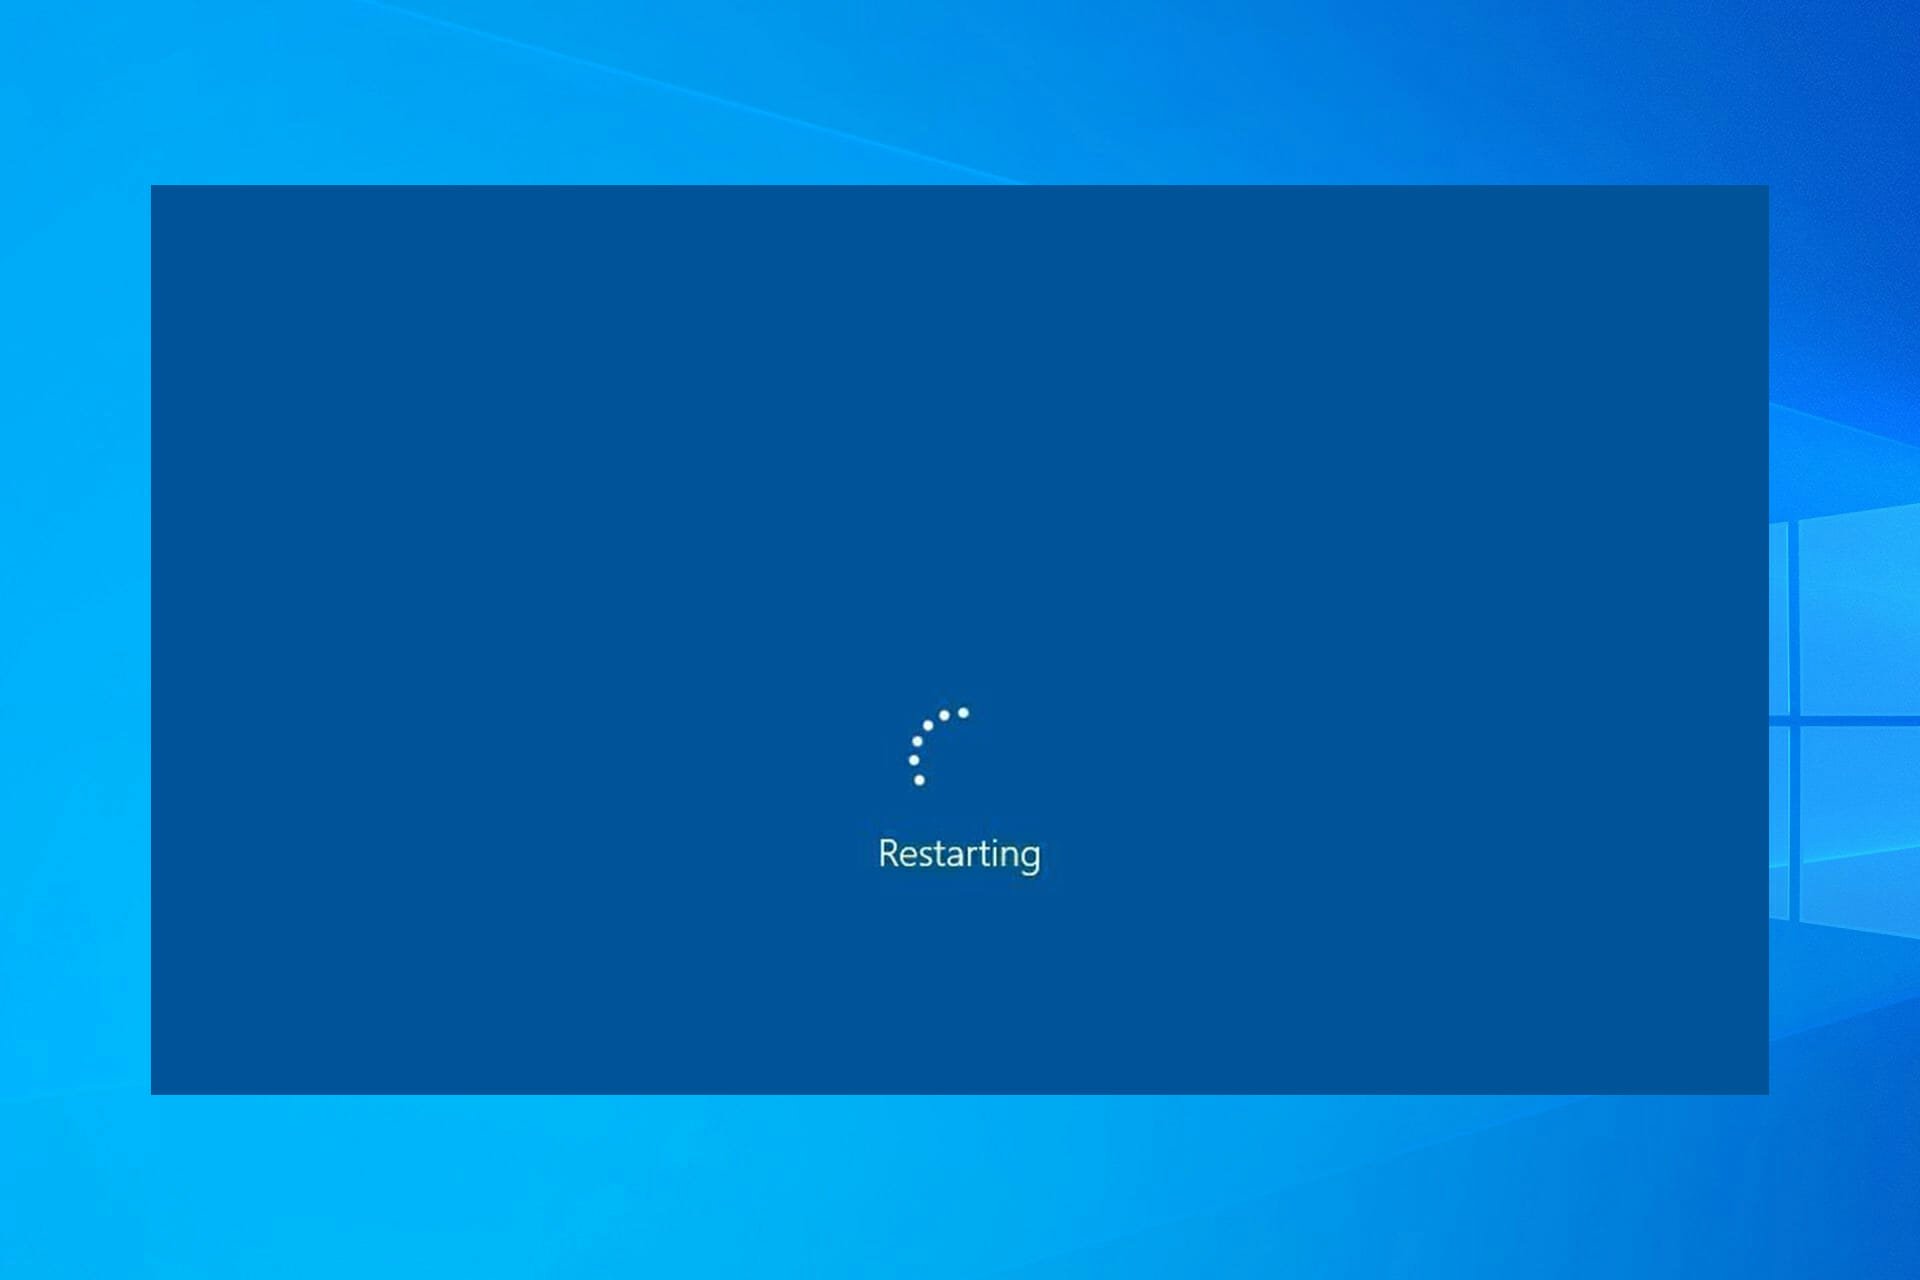 Windows 10 11 is not restarting